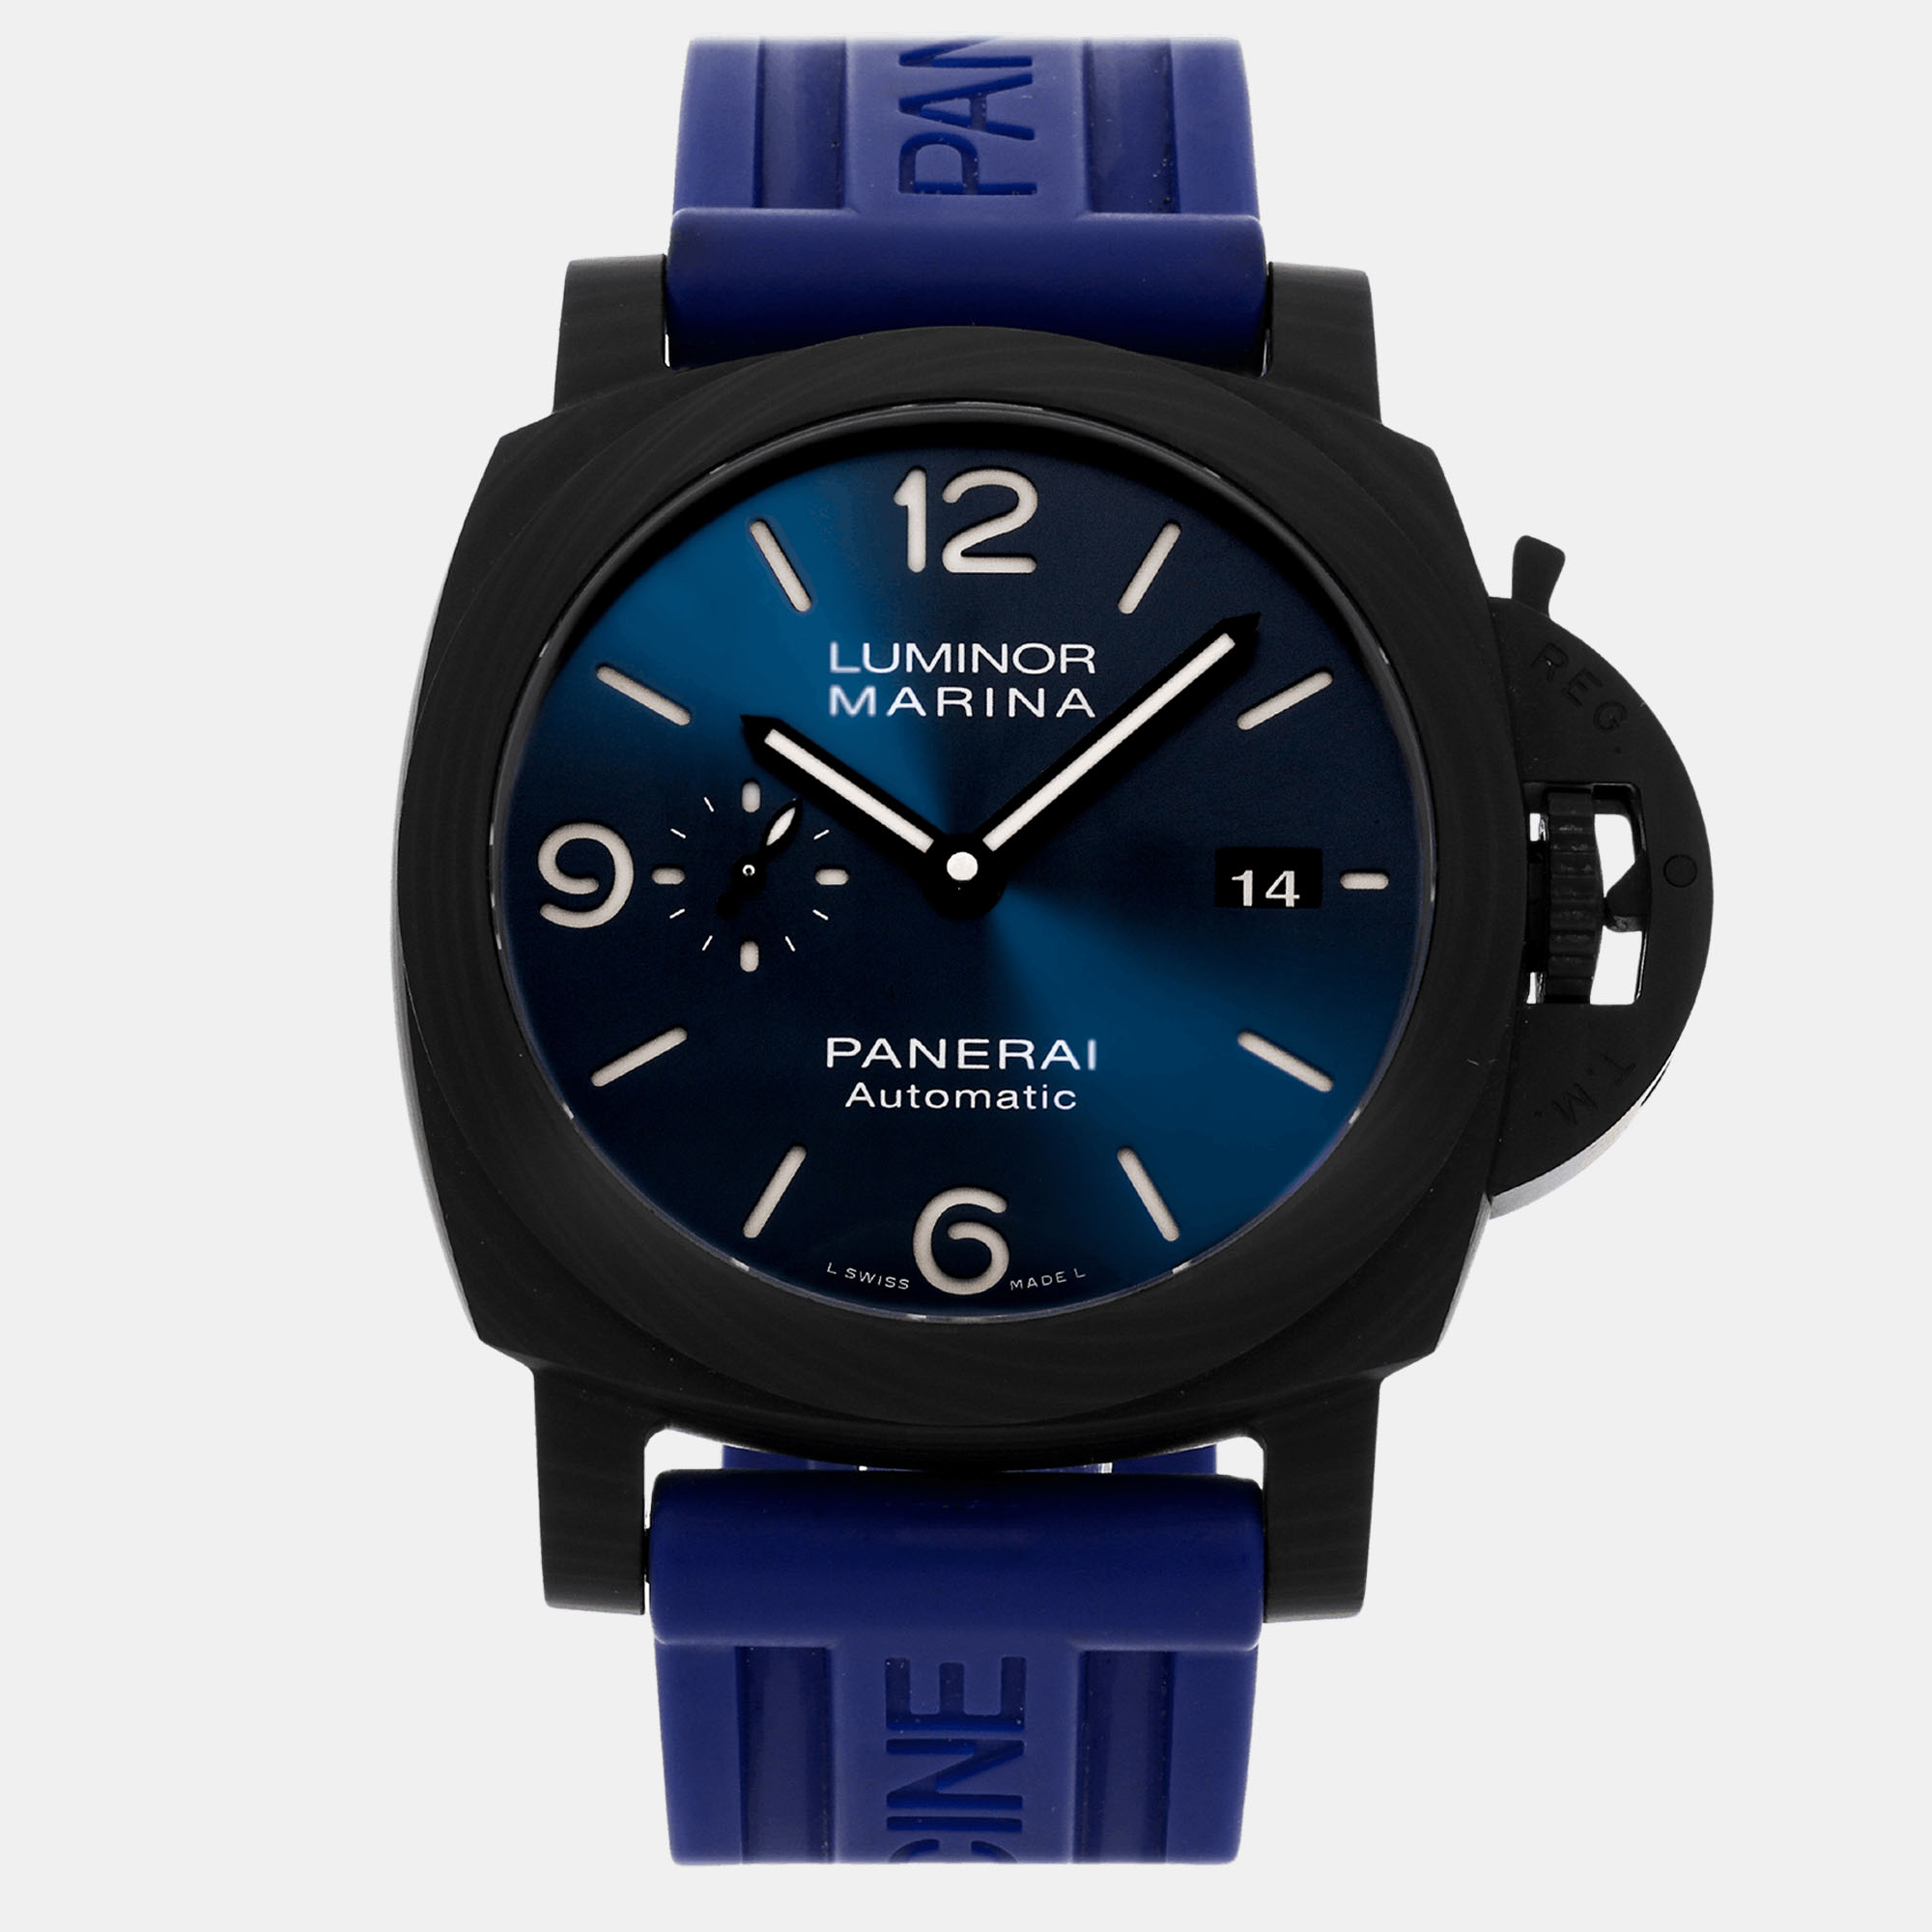 Panerai black carbon fiber luminor marina automatic men's wristwatch 44 mm